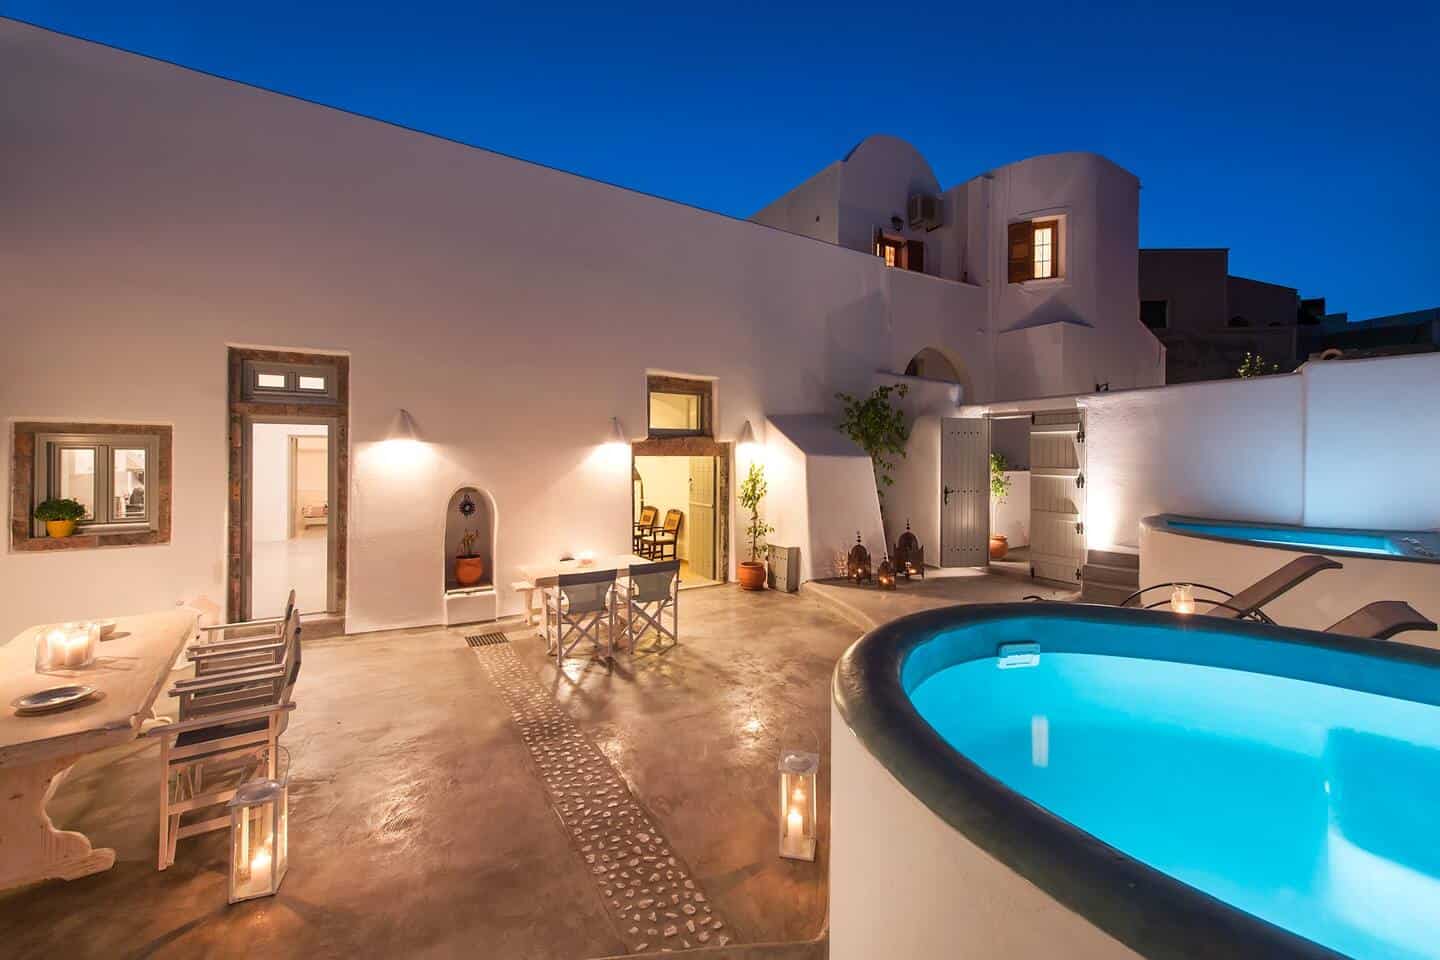 Image of Airbnb rental in Santorini, Greece